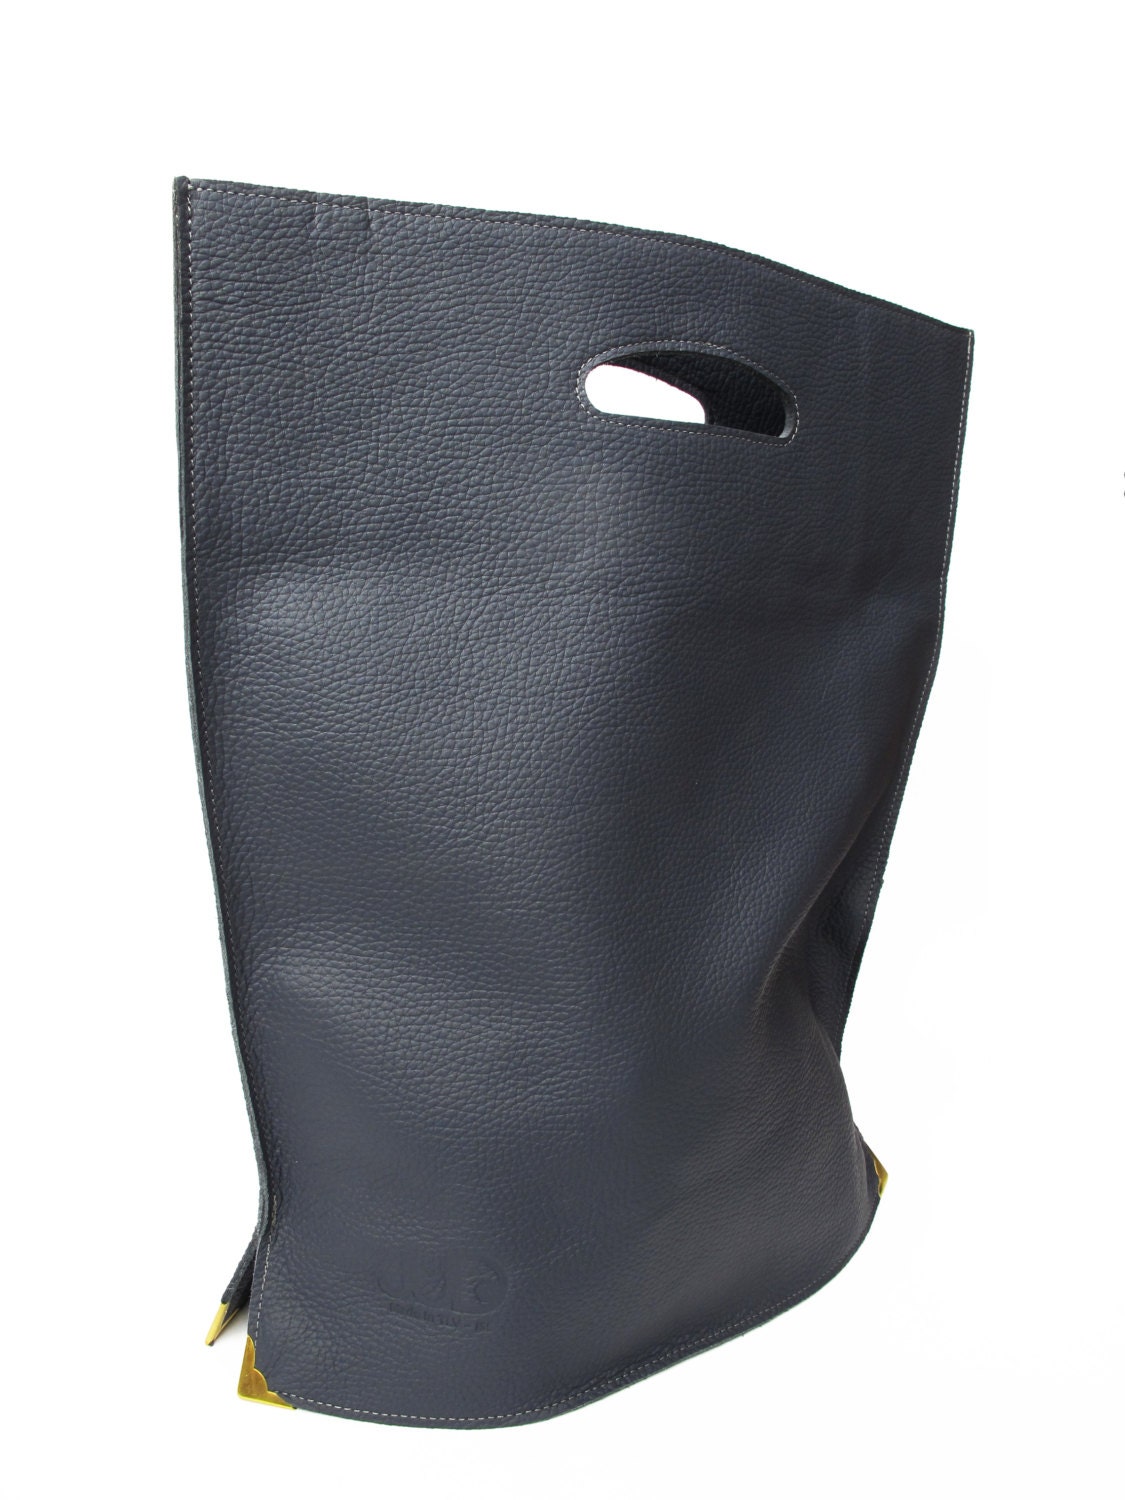 Leather hand bag, Clutch, Navy color, JUD Hand made, Premium , Hipster ,leptop, Luxury Bag - JUDtlv